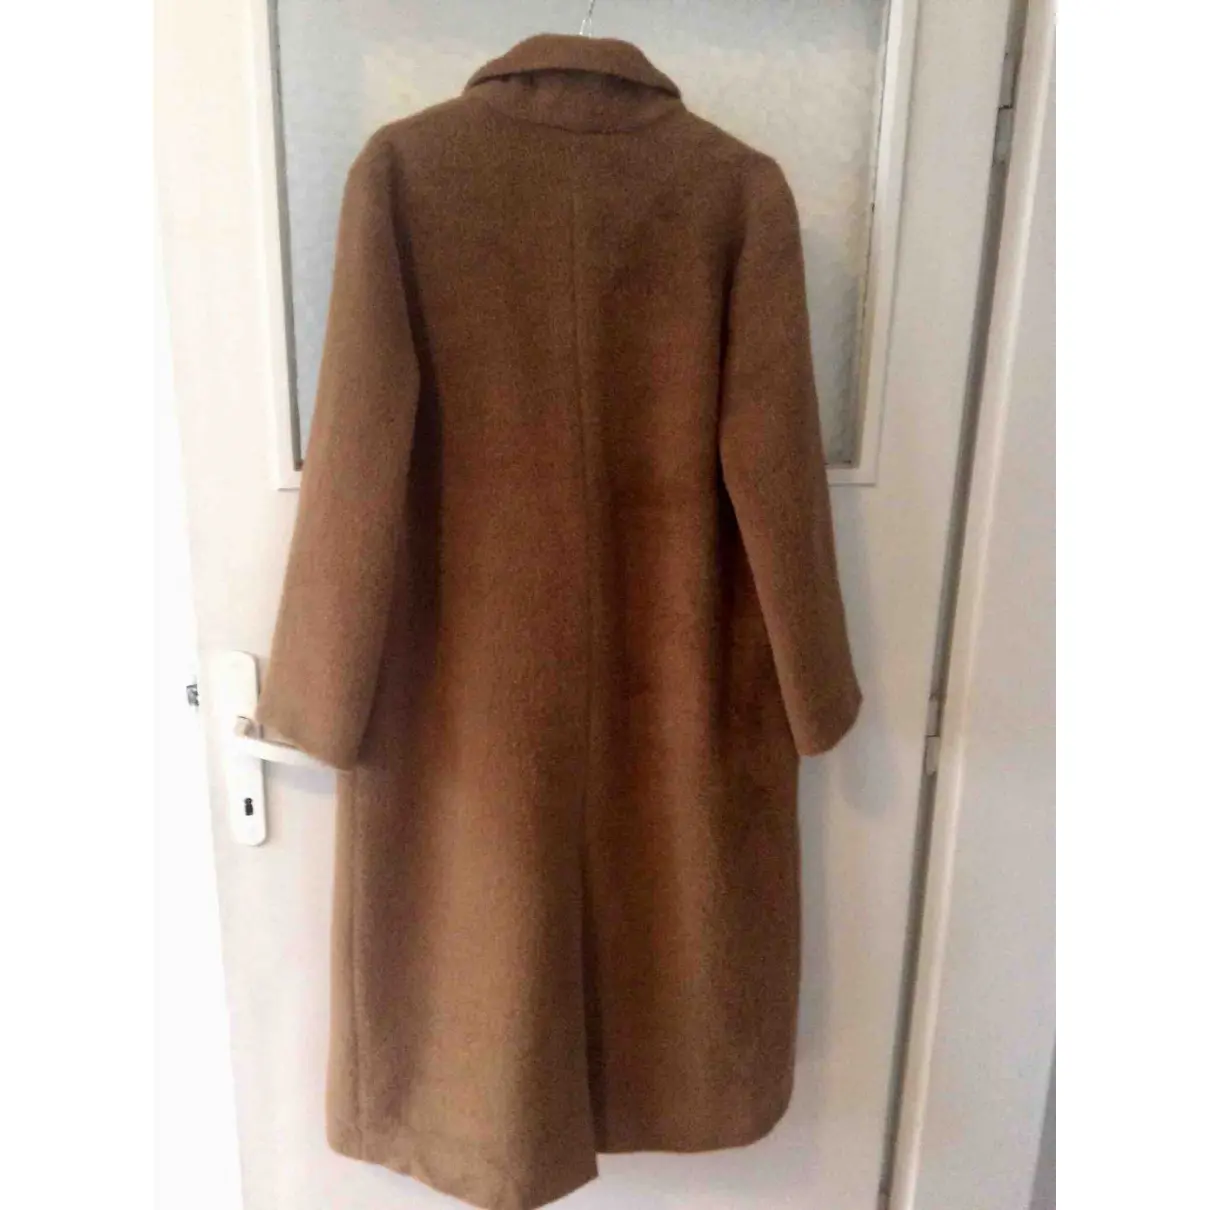 Buy Gerard Darel Wool coat online